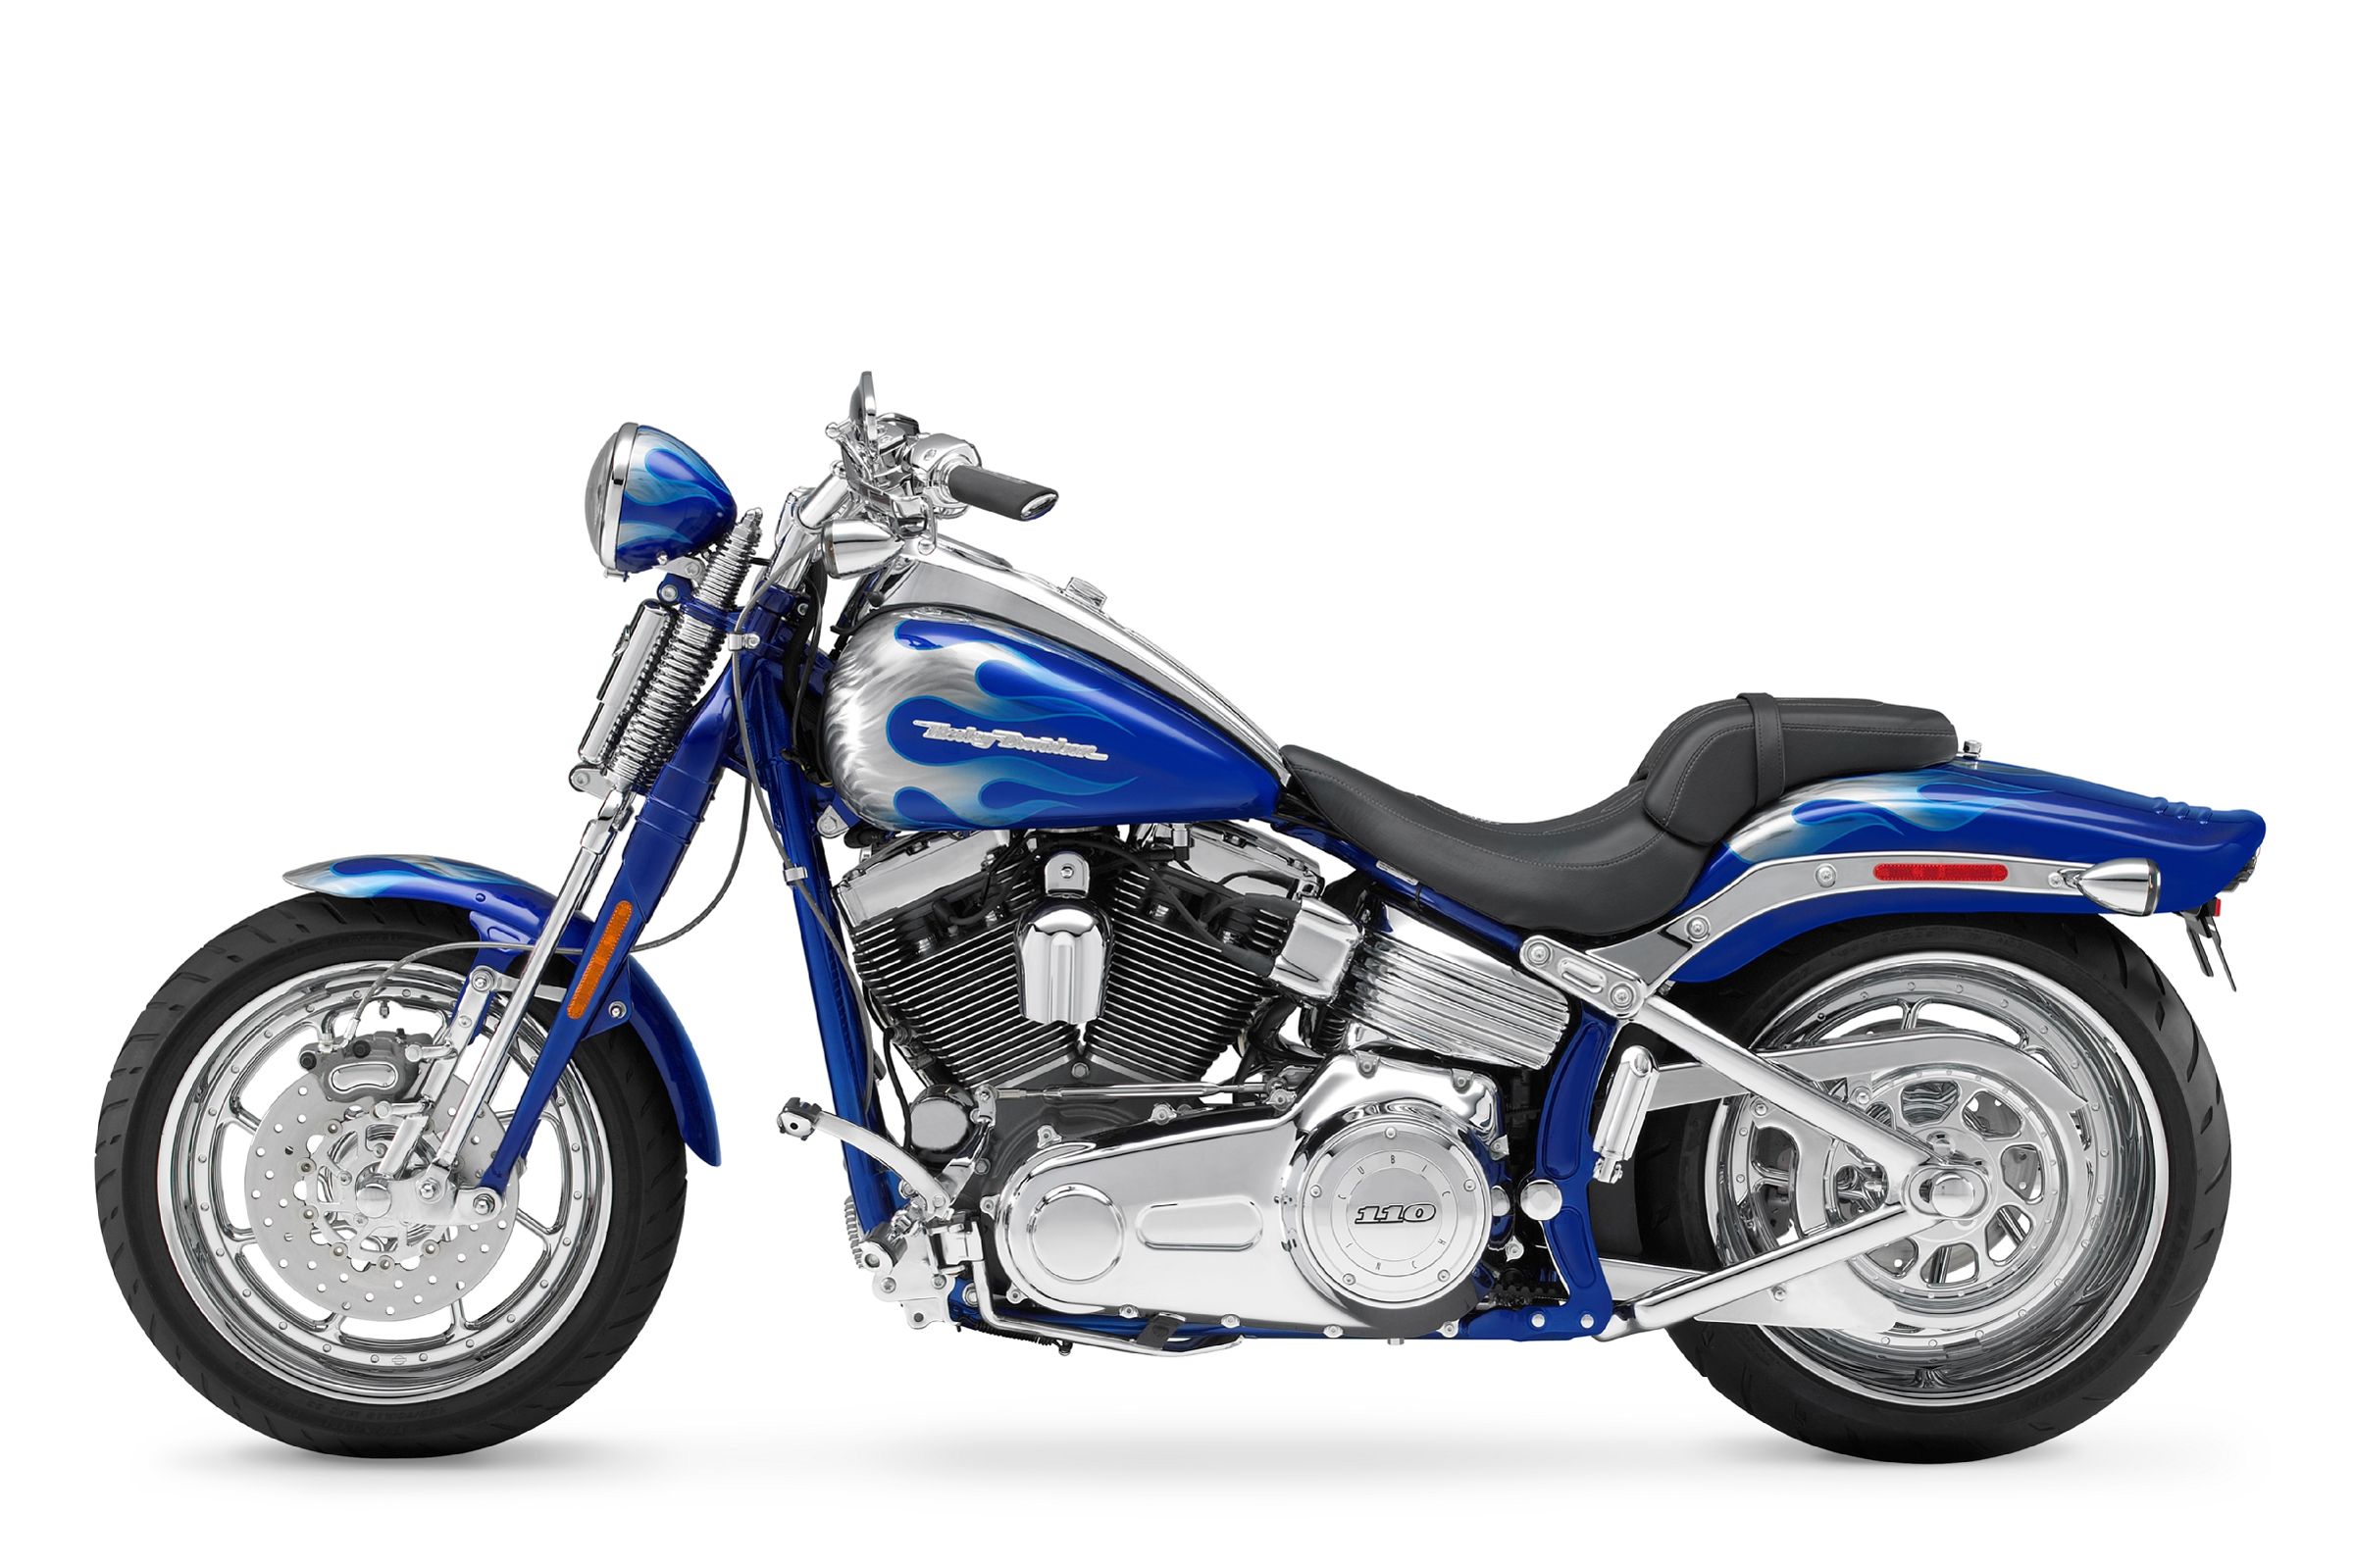  2009 Harley-Davidson CVO Softail Springer